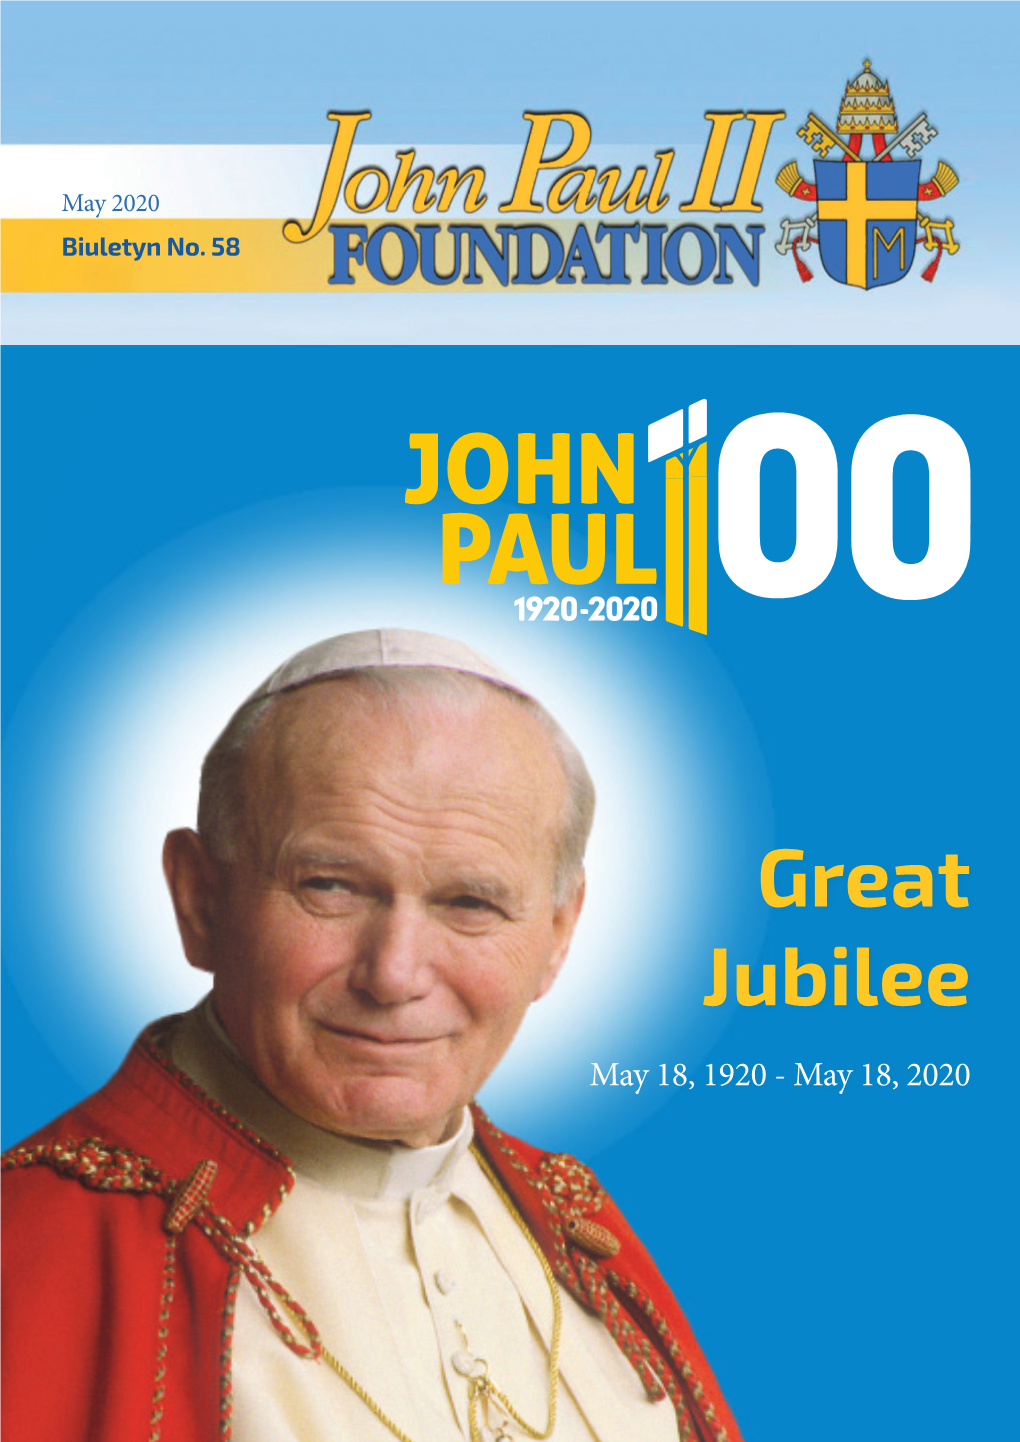 Great Jubilee May 18, 1920 - May 18, 2020 JOHN PAUL II FOU NDATION